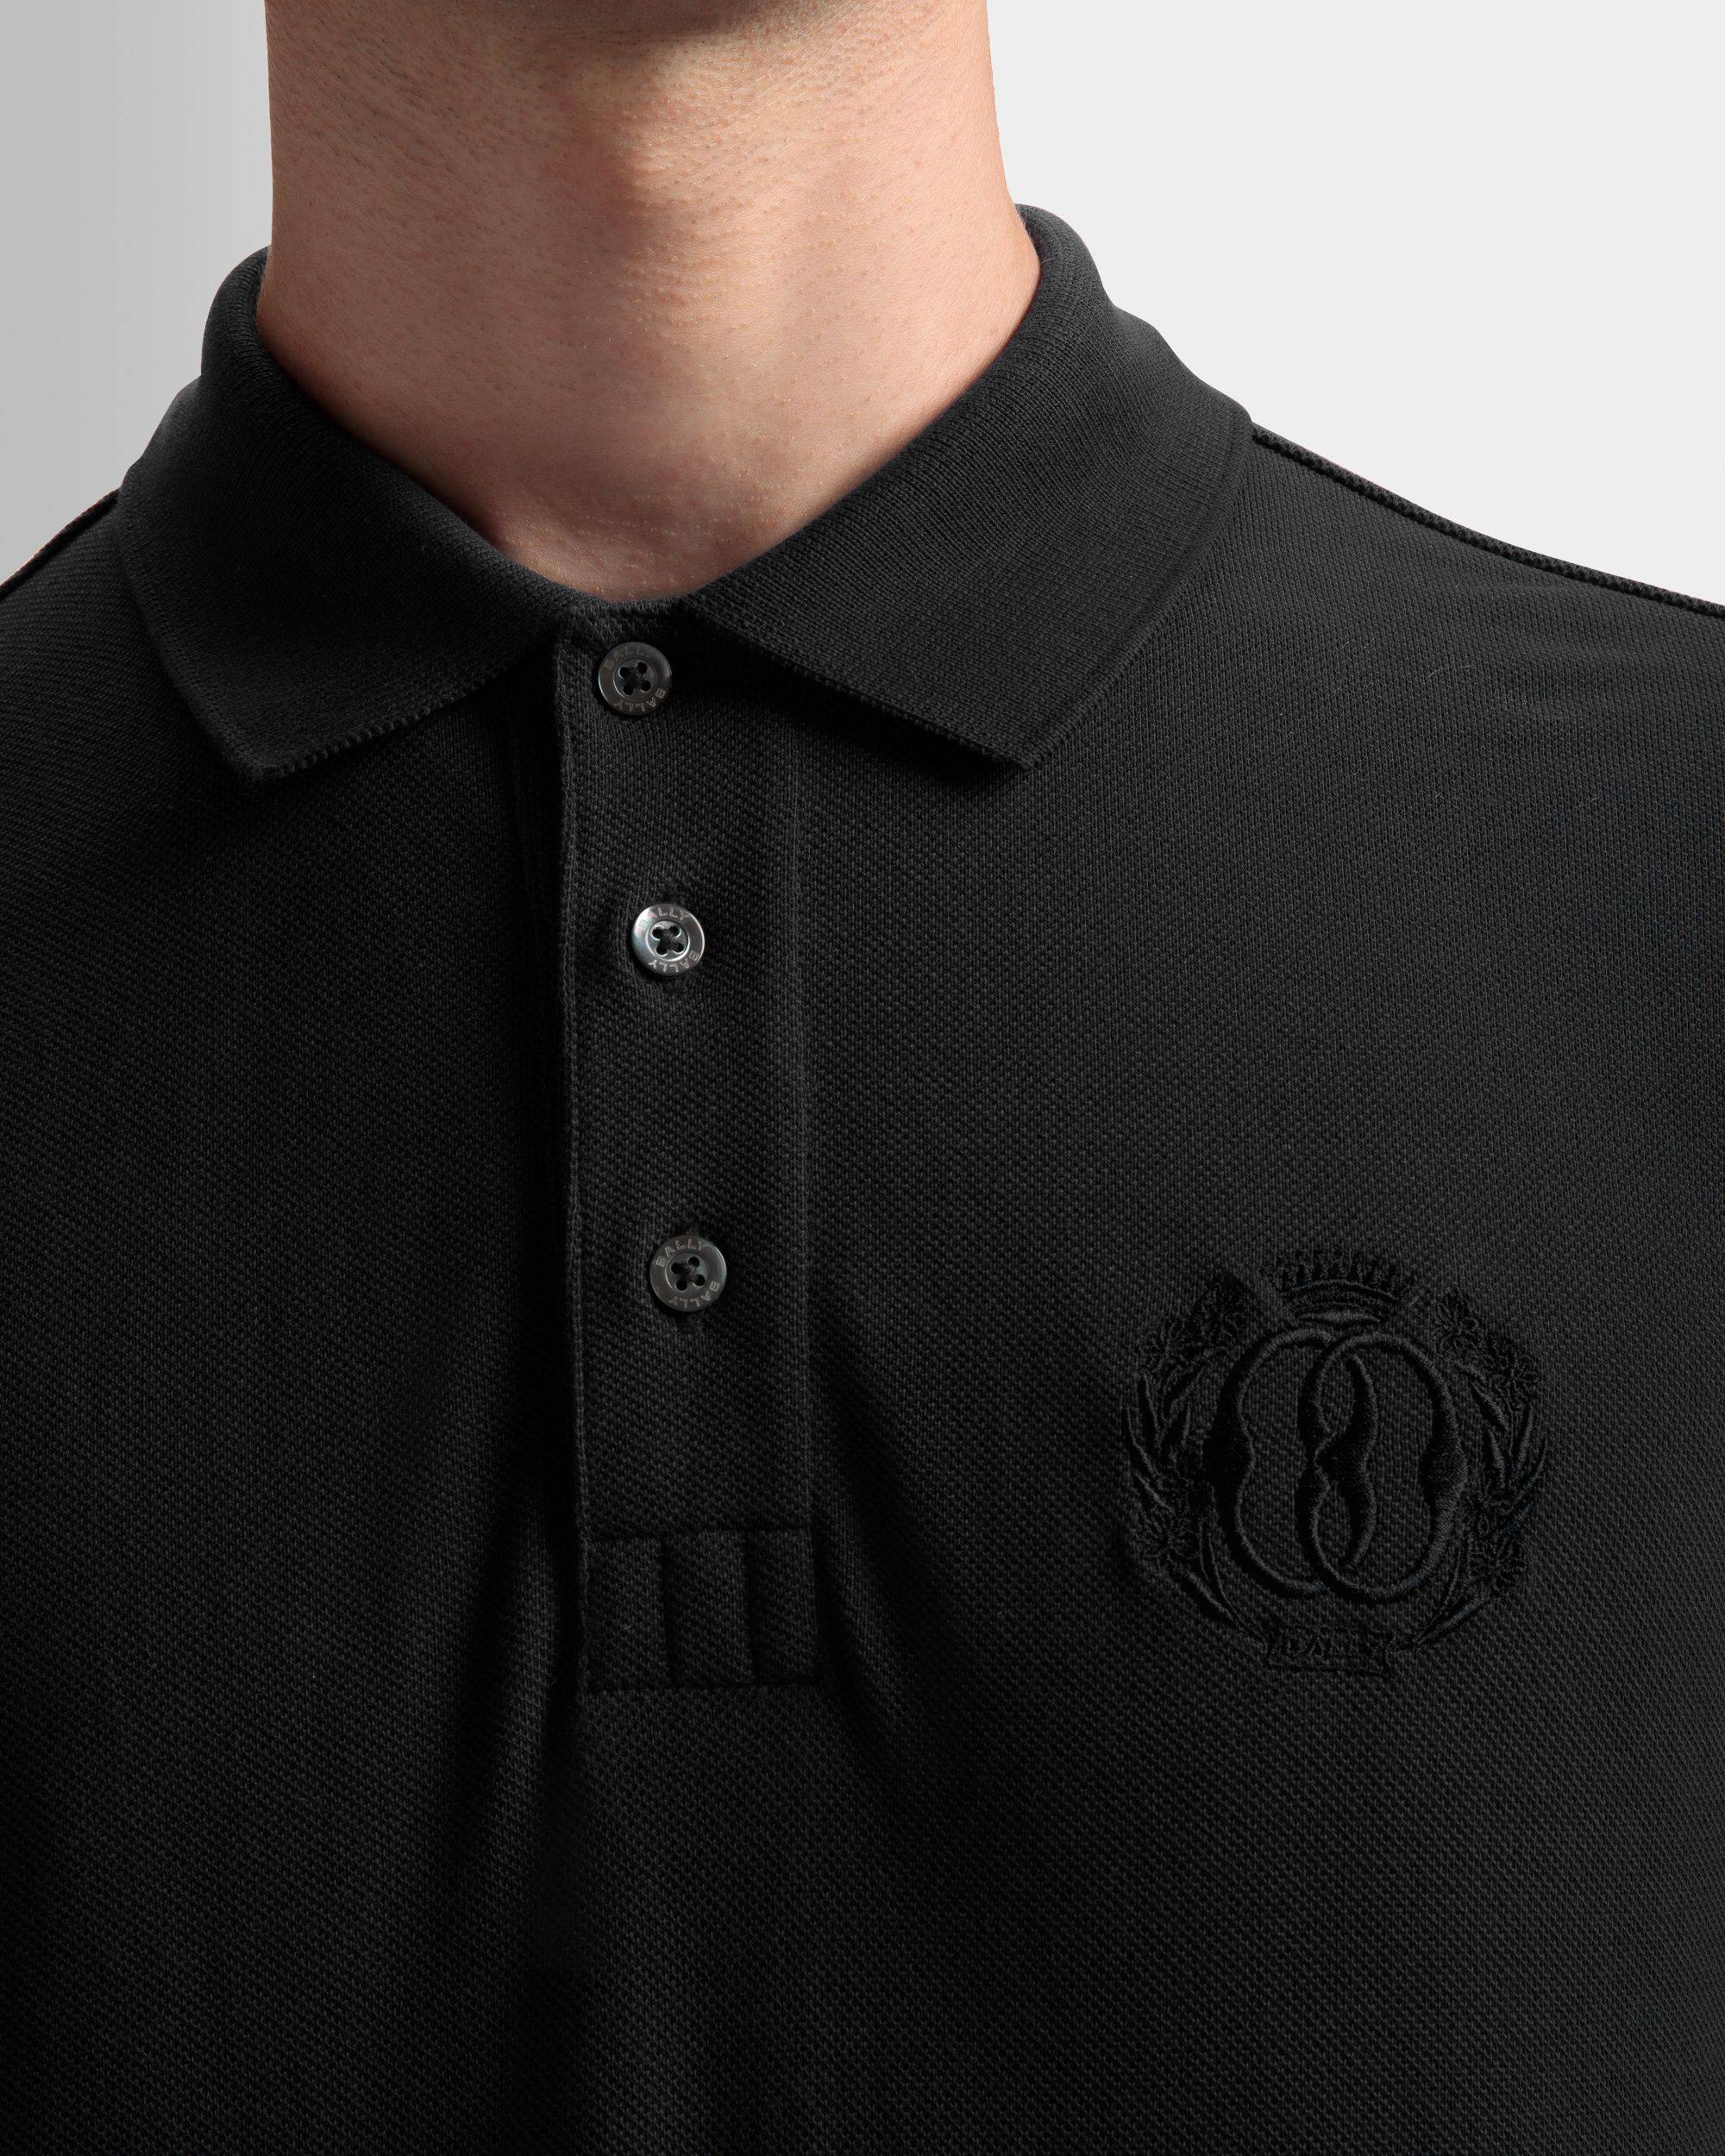 Emblem Poloshirt | Poloshirt für Herren | Schwarze Baumwolle | Bally | Model getragen Detail